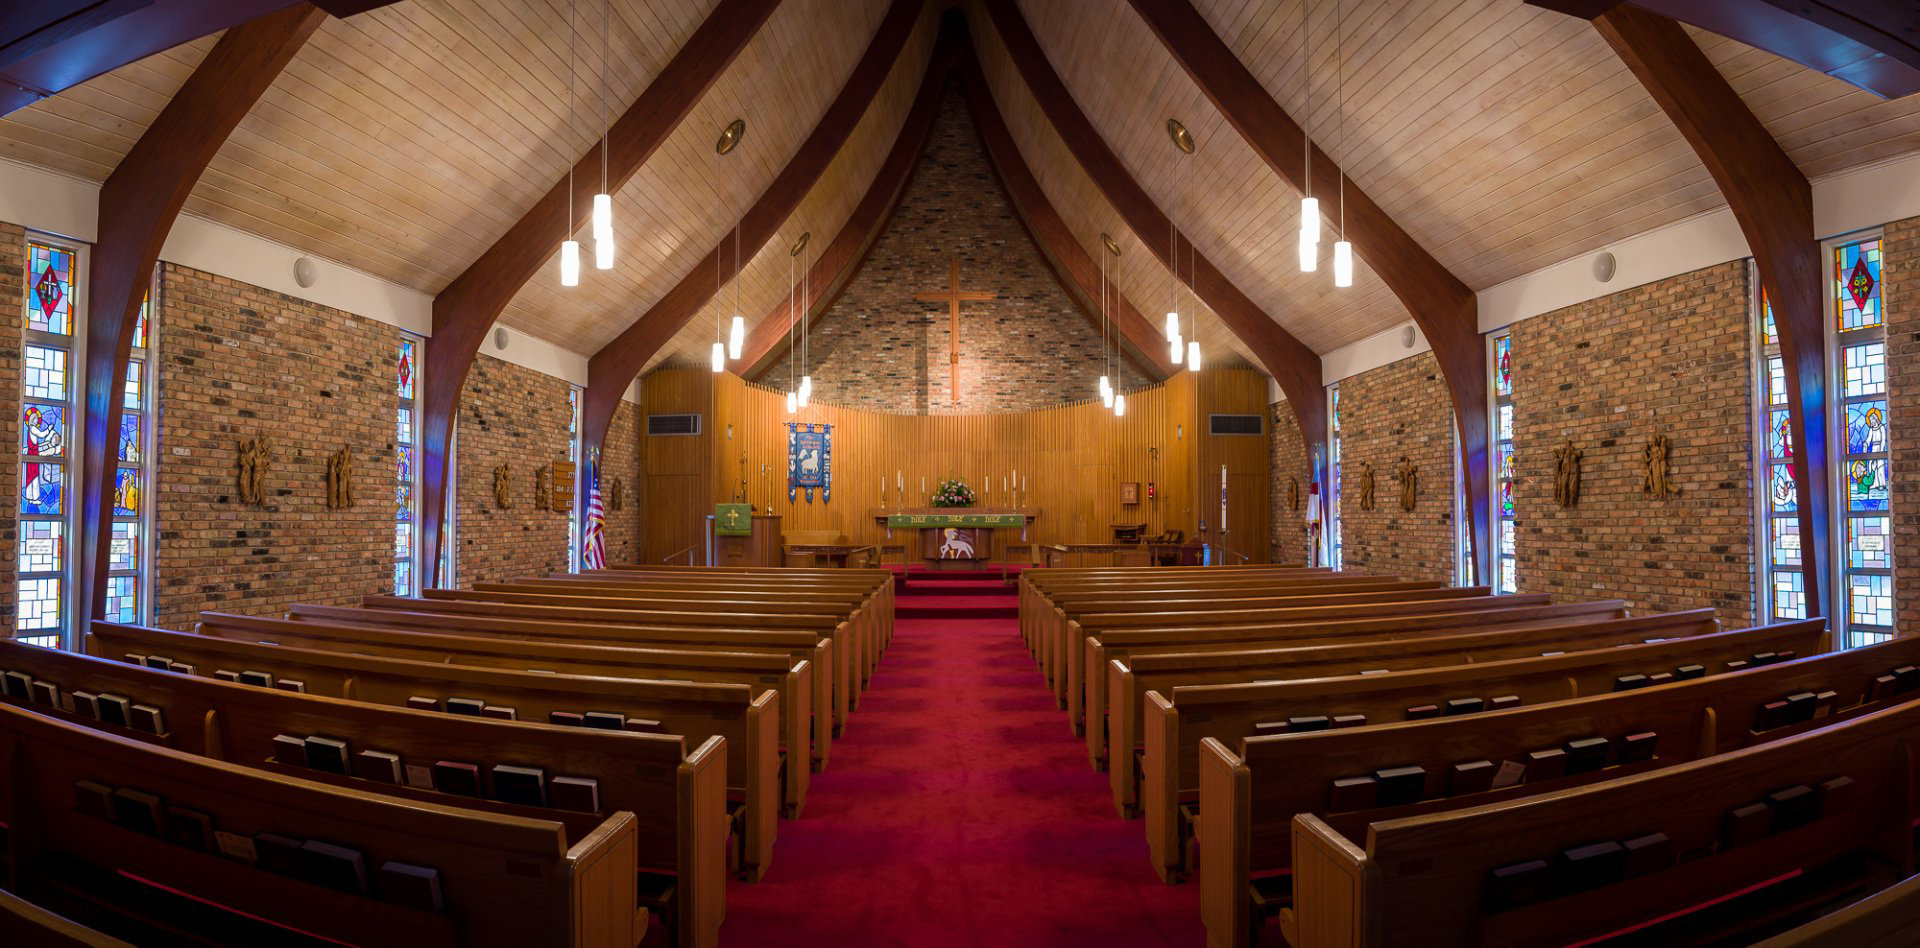 Interior Photograph of the Episcopal Church of the Redeemer in Ruston, Louisiana